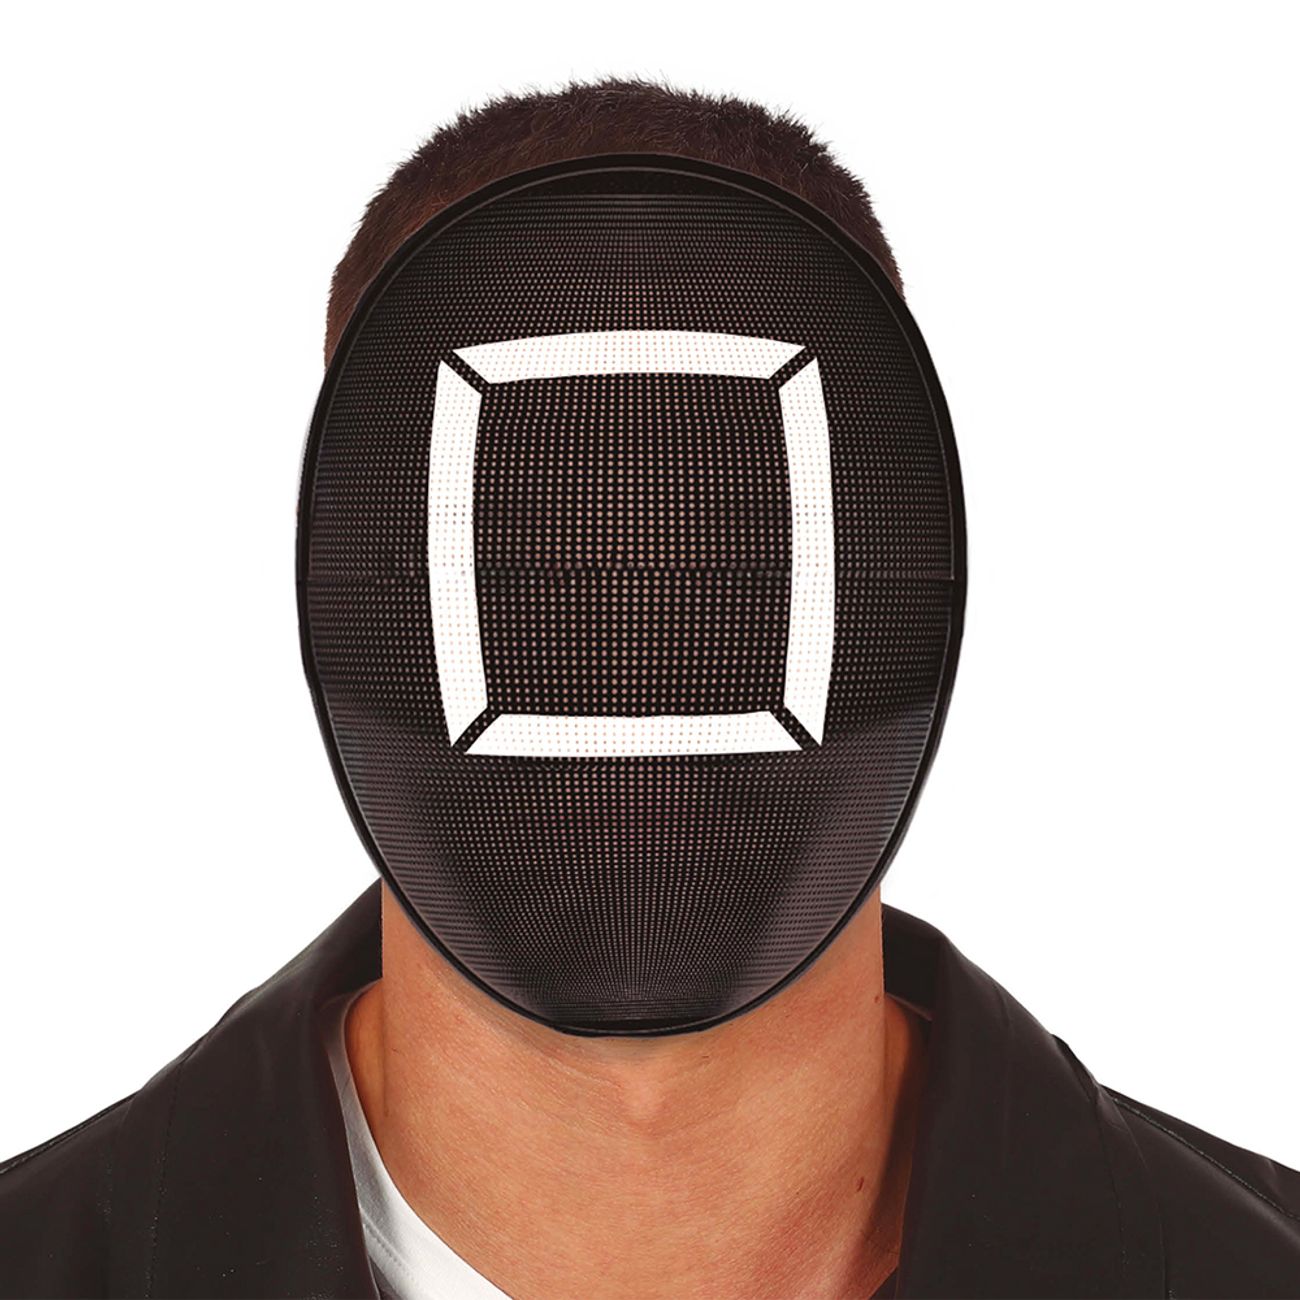 the-gamer-square-mask-82648-1